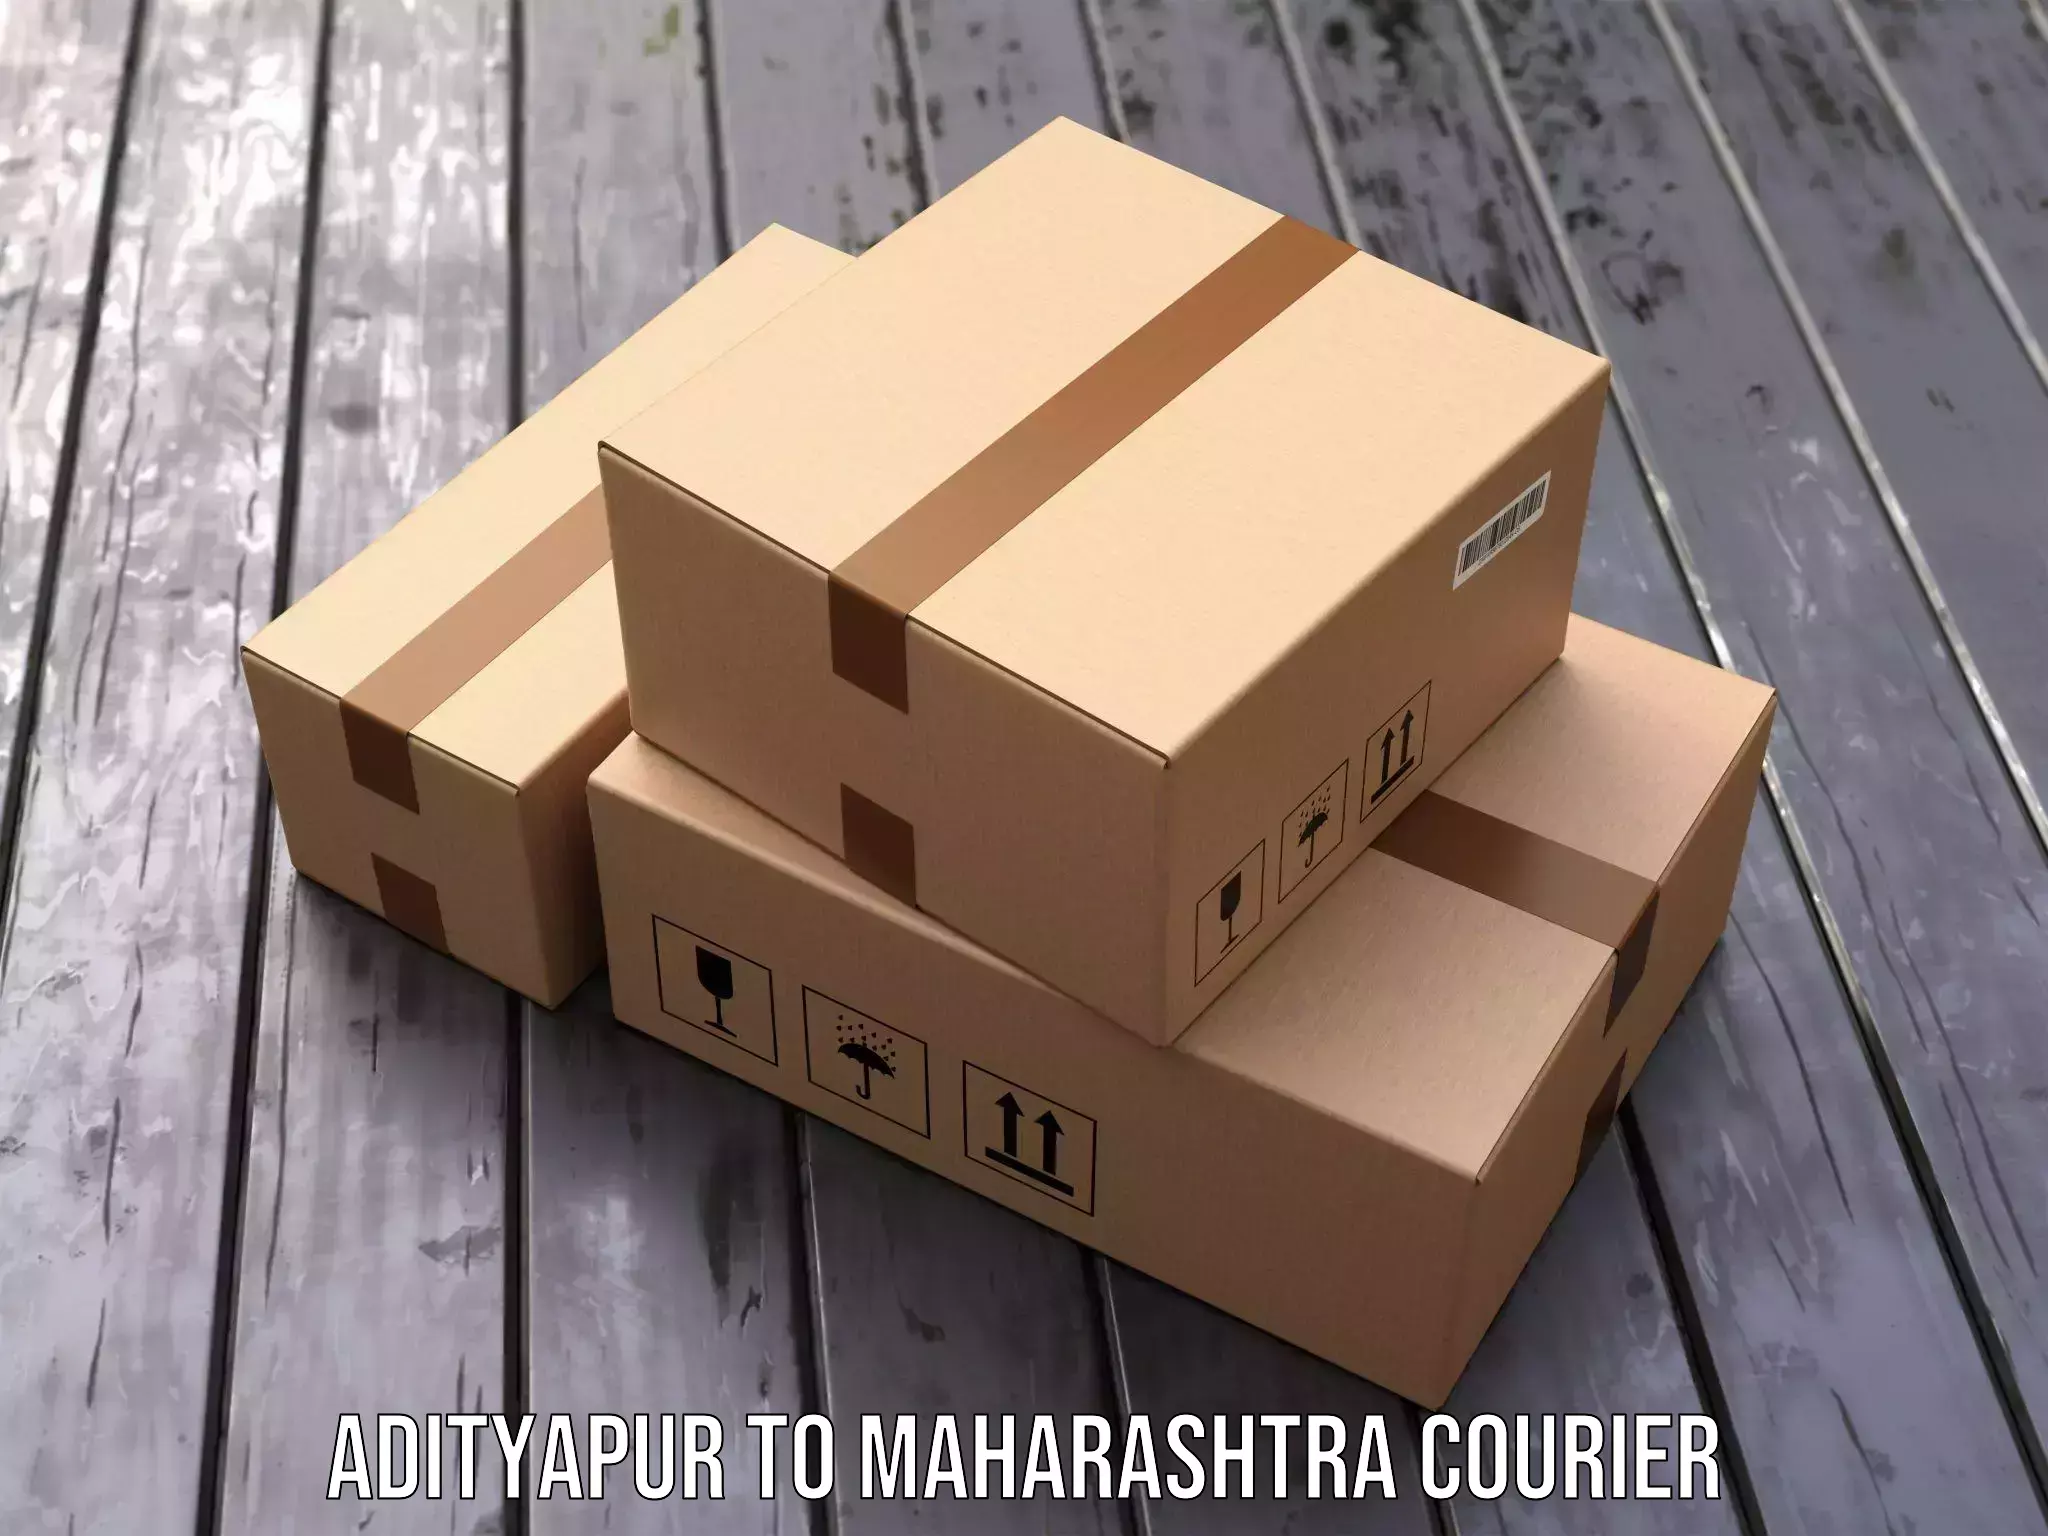 Automated parcel services Adityapur to IIIT Nagpur